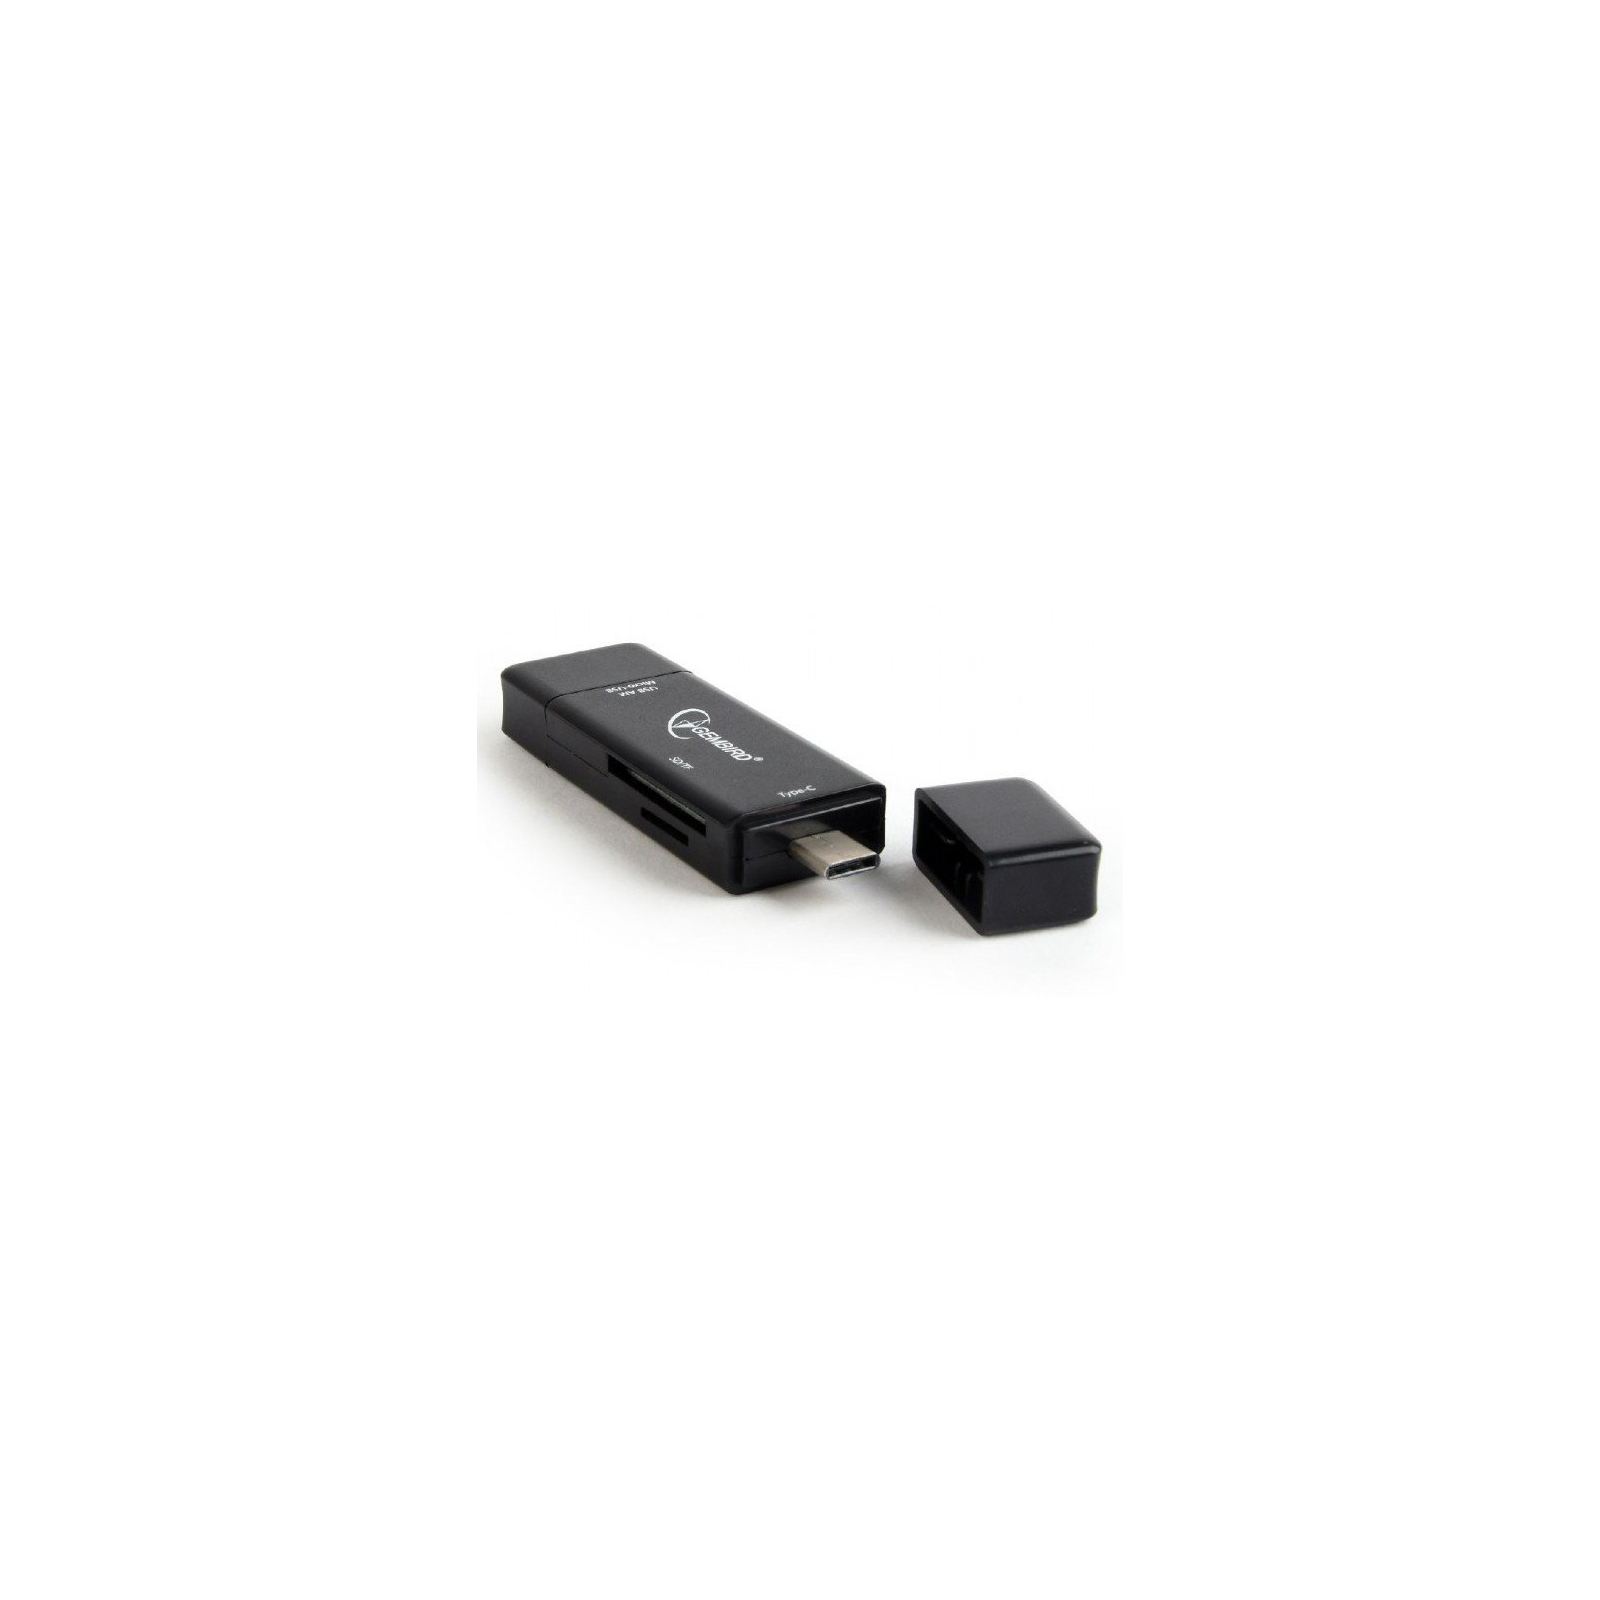 Зчитувач флеш-карт Gembird USB/micro USB SD/TF (UHB-CR3IN1-01) зображення 2